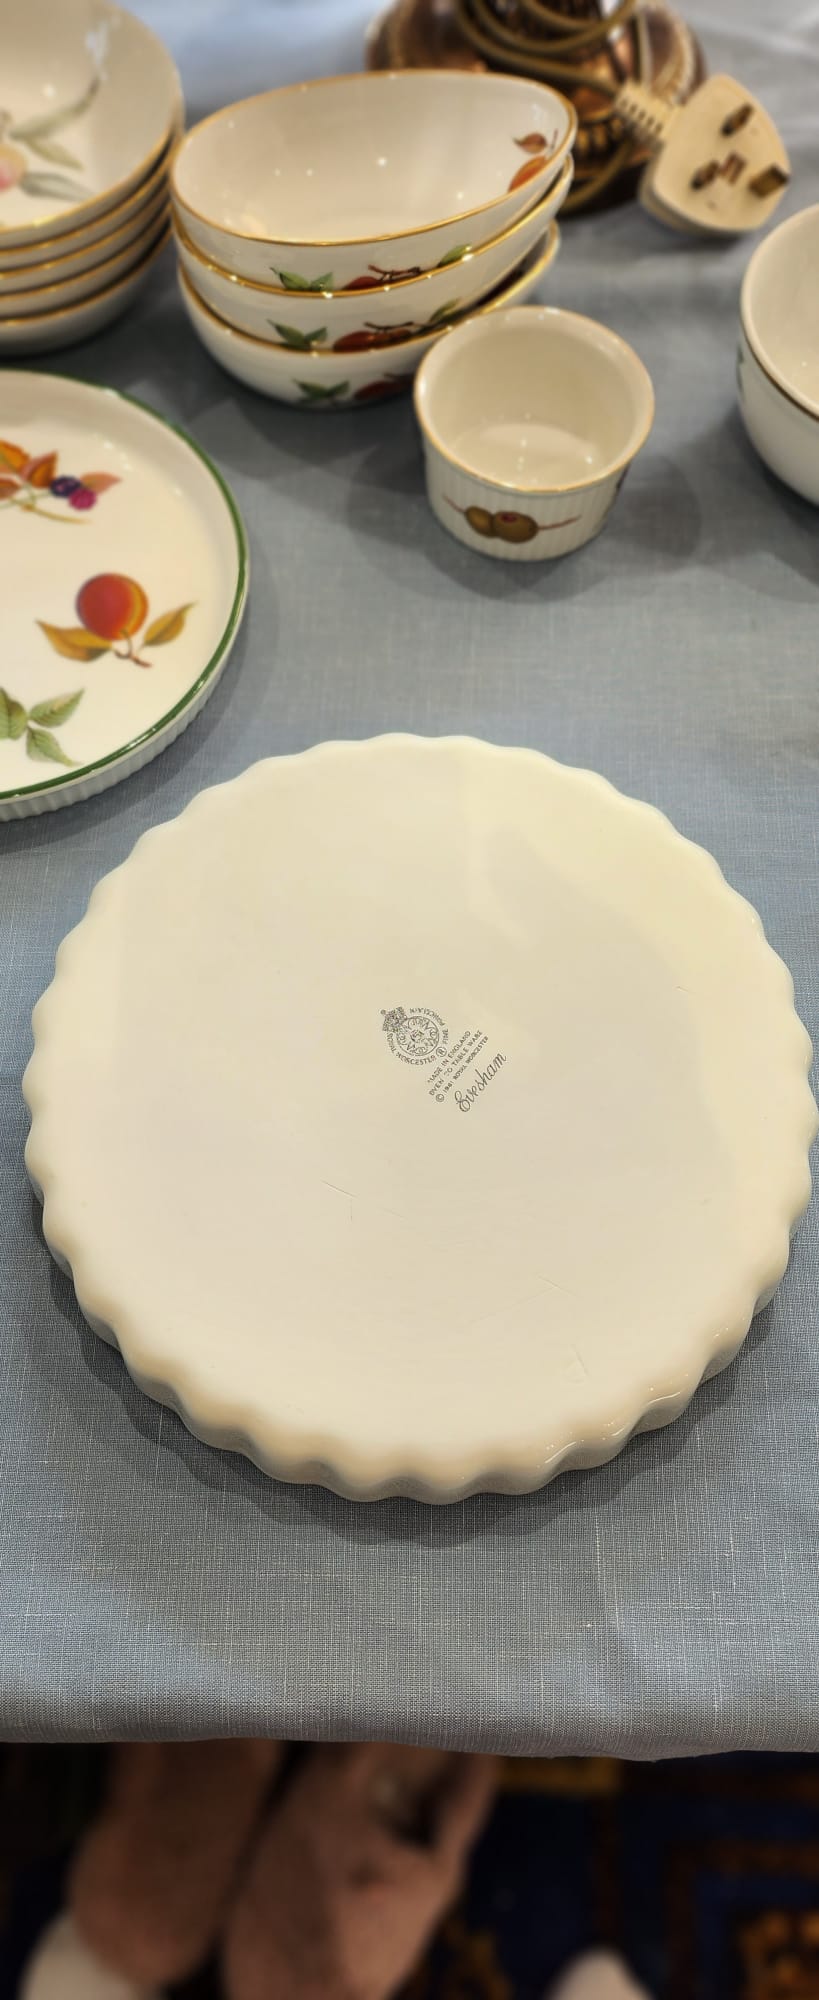 Royal Worcester Evesham gold pie dish 23 cm